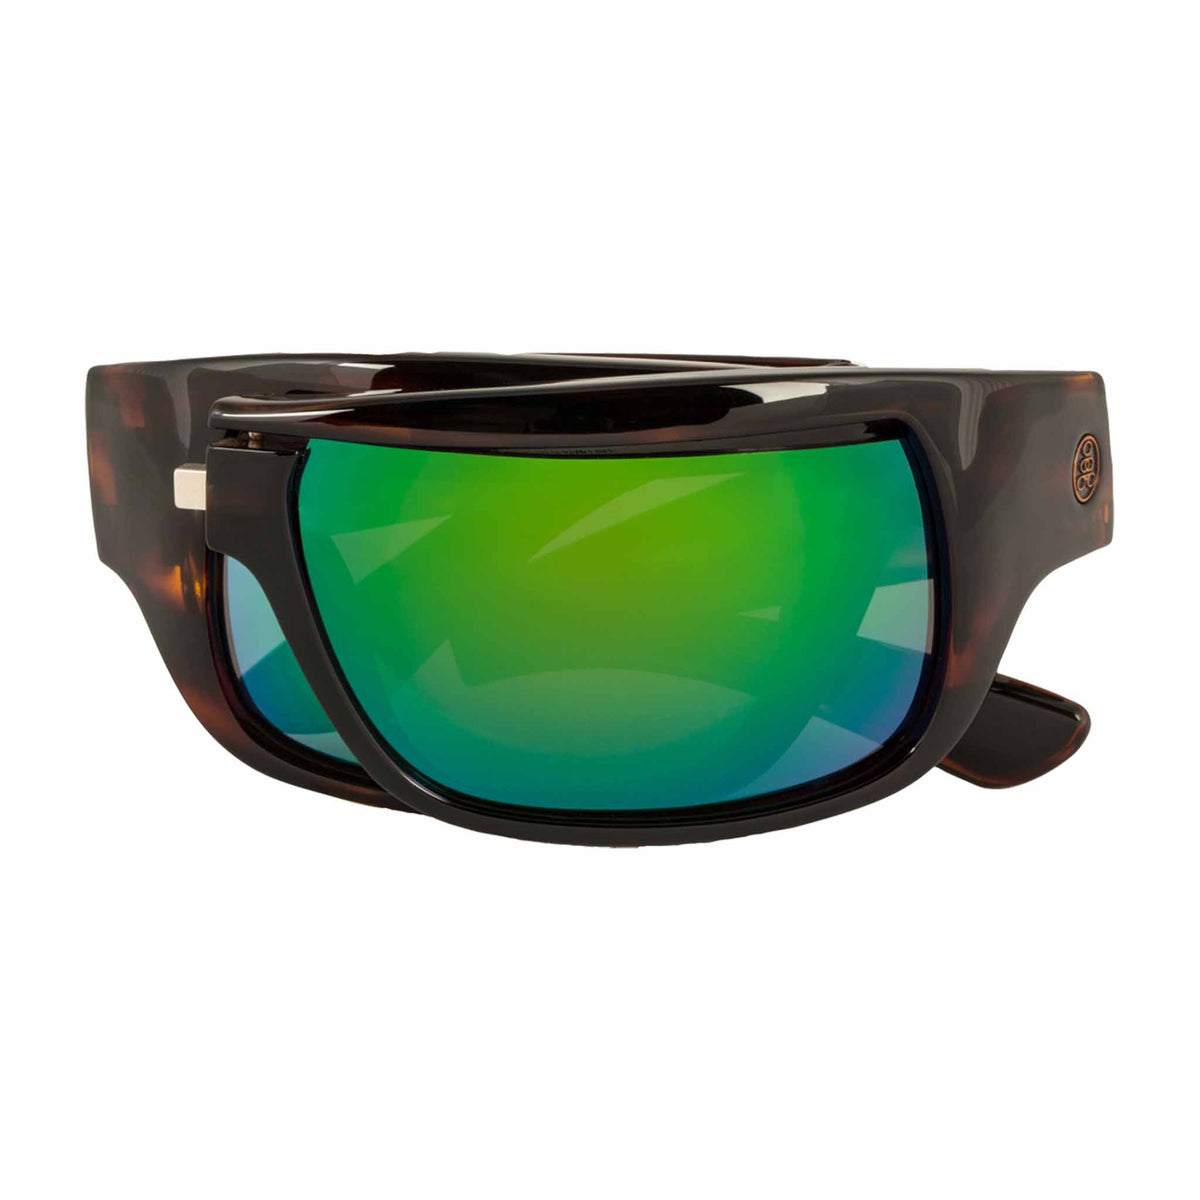 Popticals, Premium Compact Sunglasses, PopH2O, 010070-CTEN, Polarized Sunglasses, Gloss Tortoise Frame, Gray Lenses w/Green Mirror Finish, Compact View